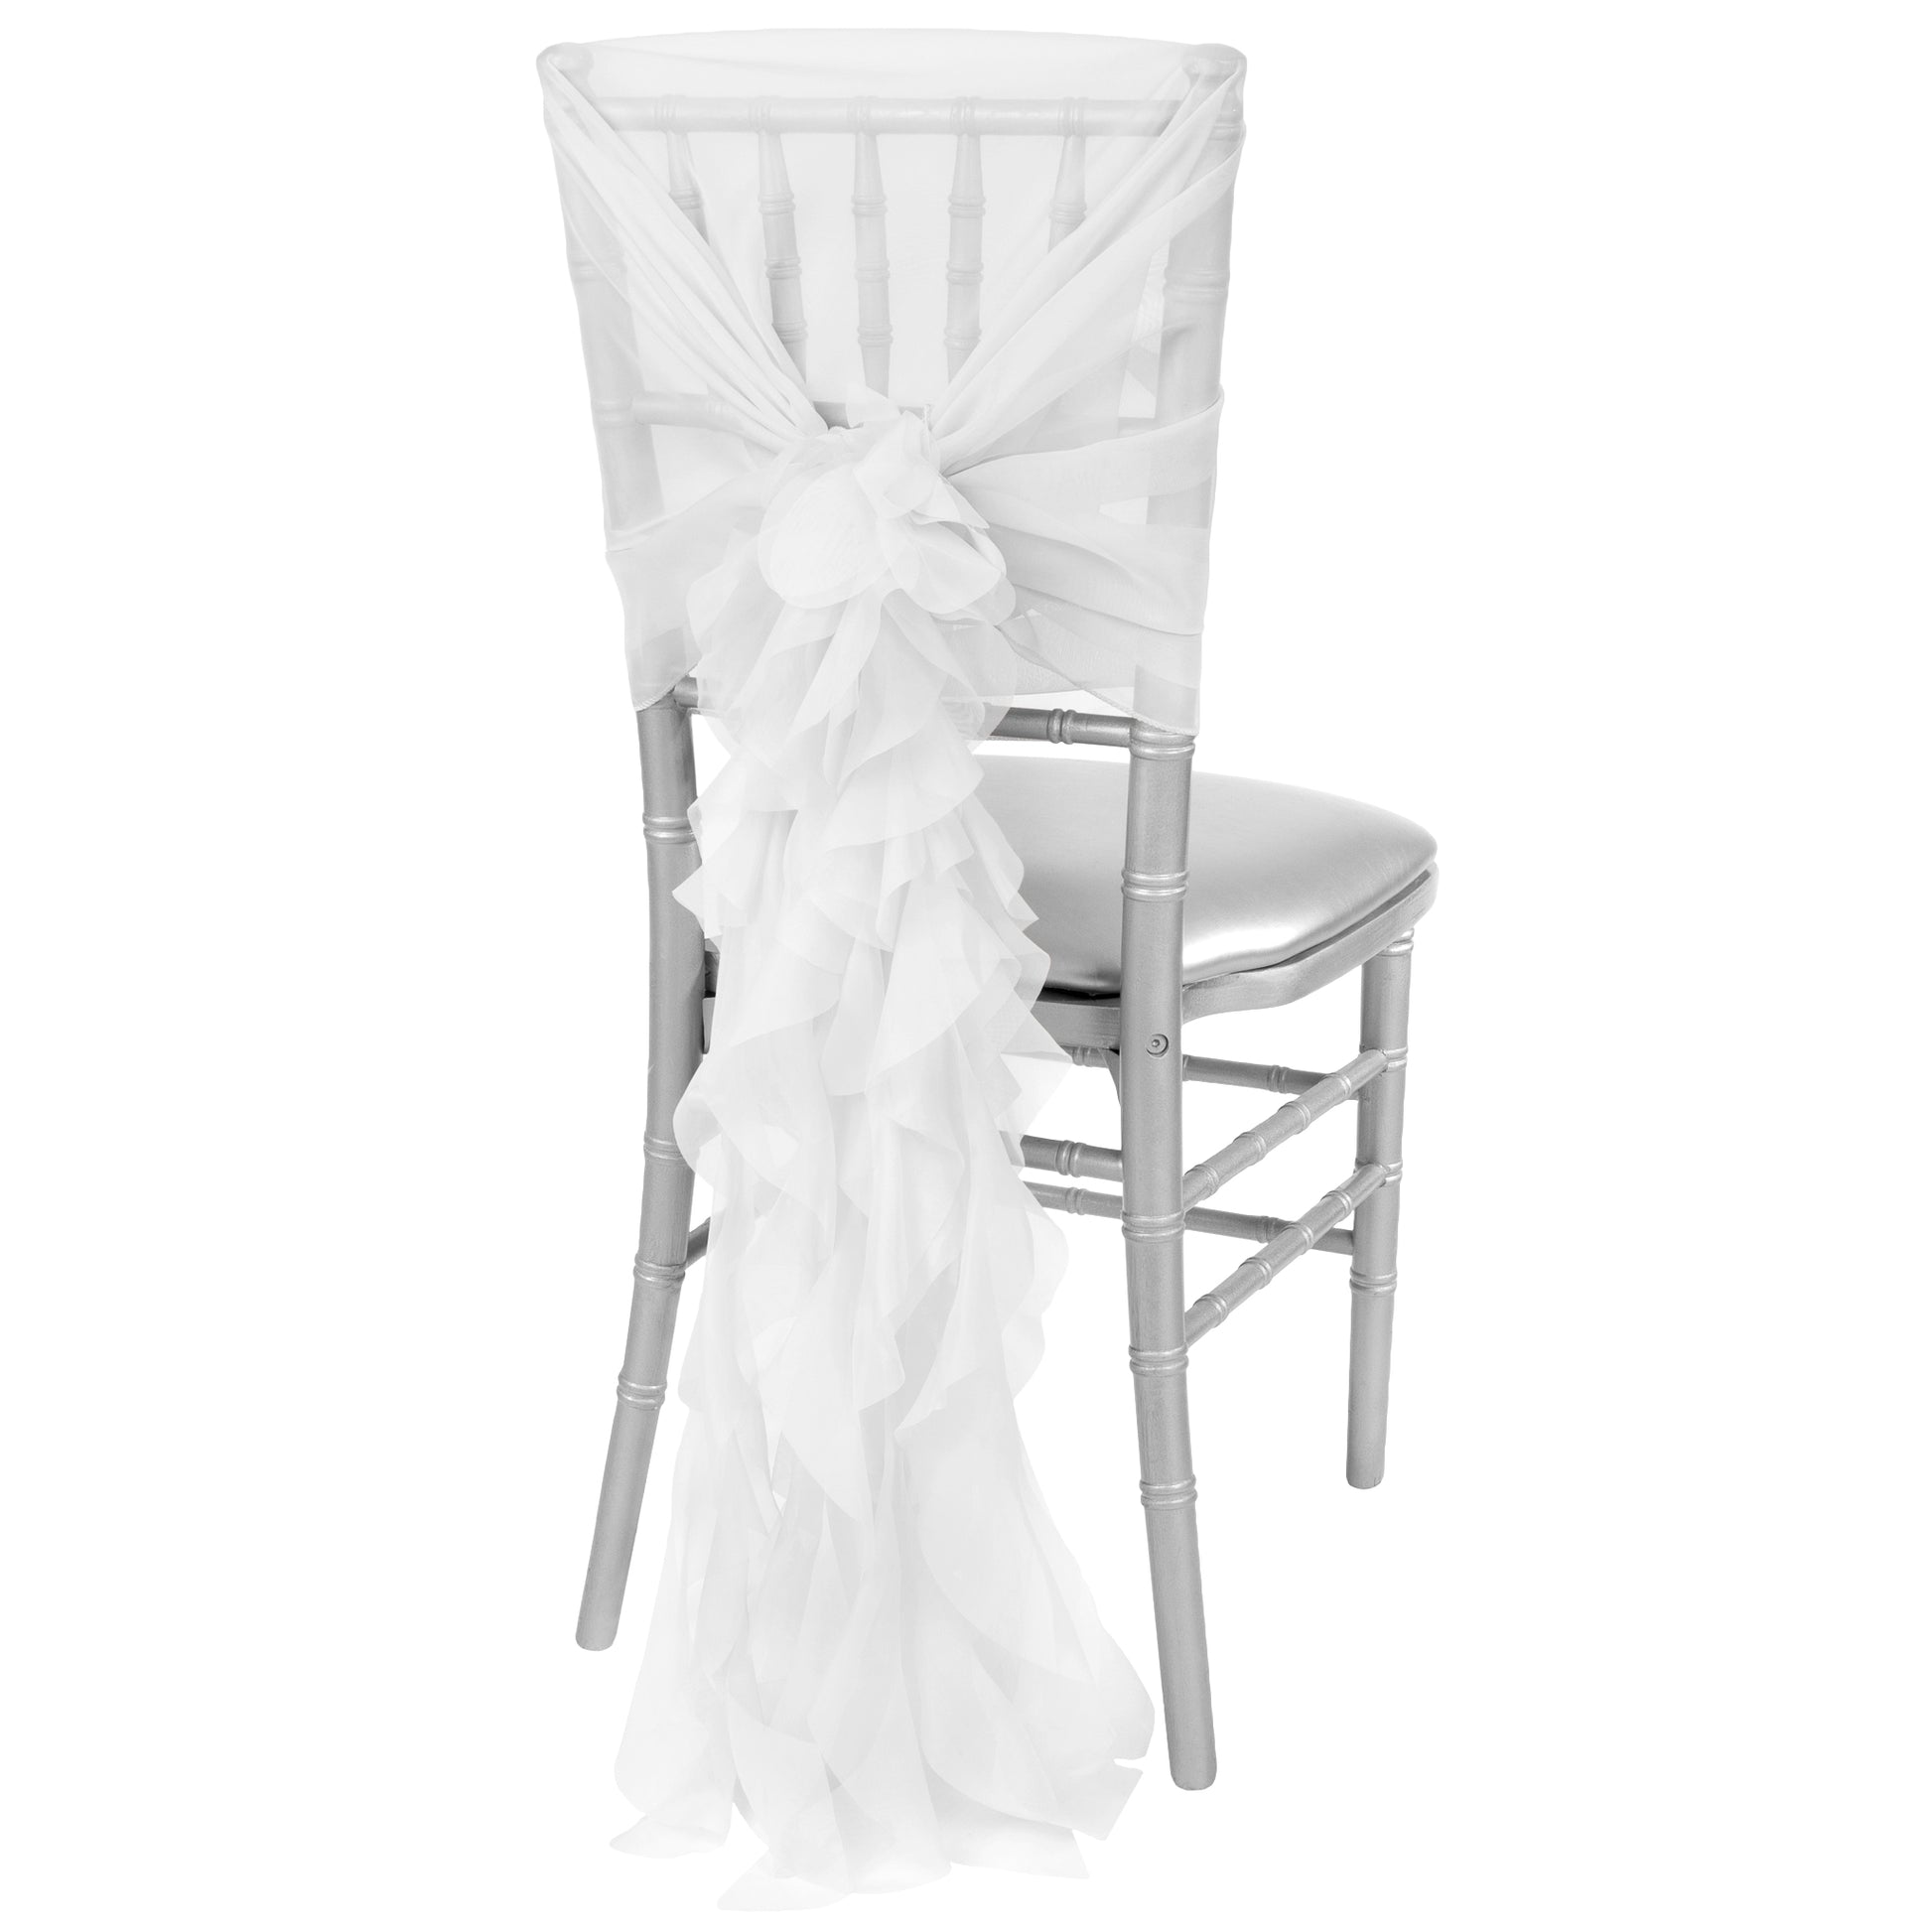 1 Set of Soft Curly Willow Ruffles Chair Sash & Cap - White - CV Linens